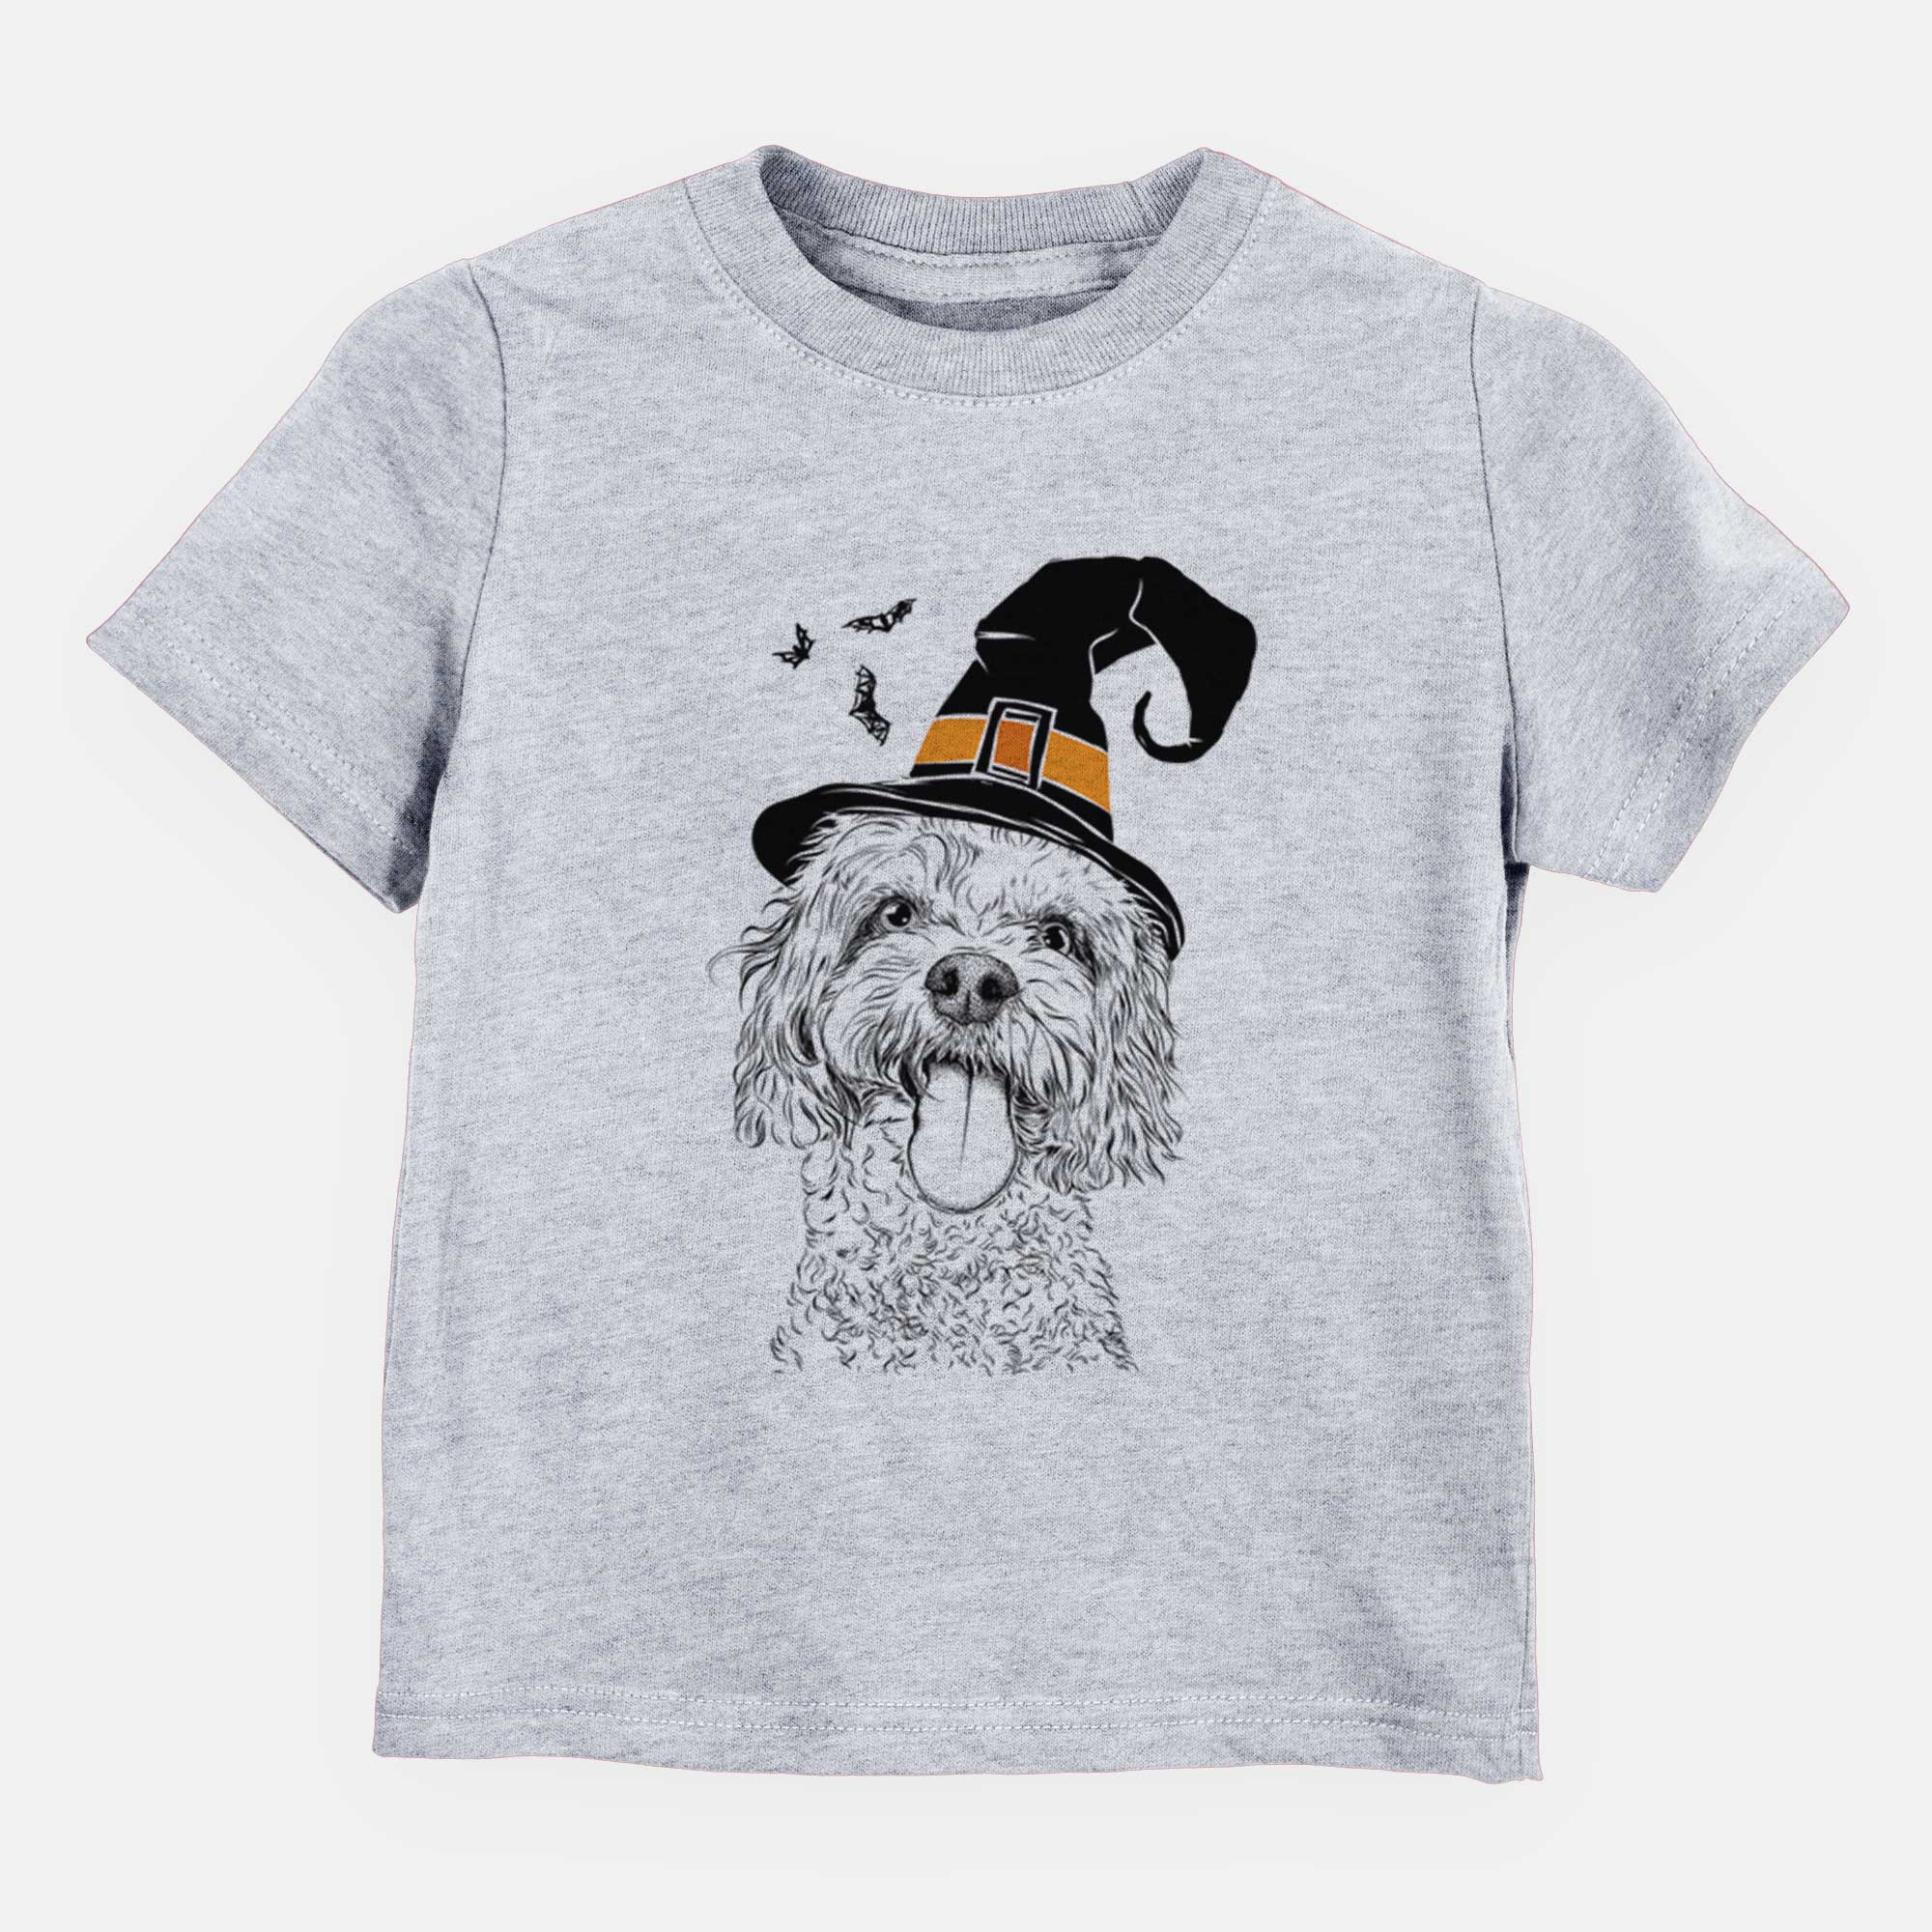 Halloween Barney the Cavachon - Kids/Youth/Toddler Shirt